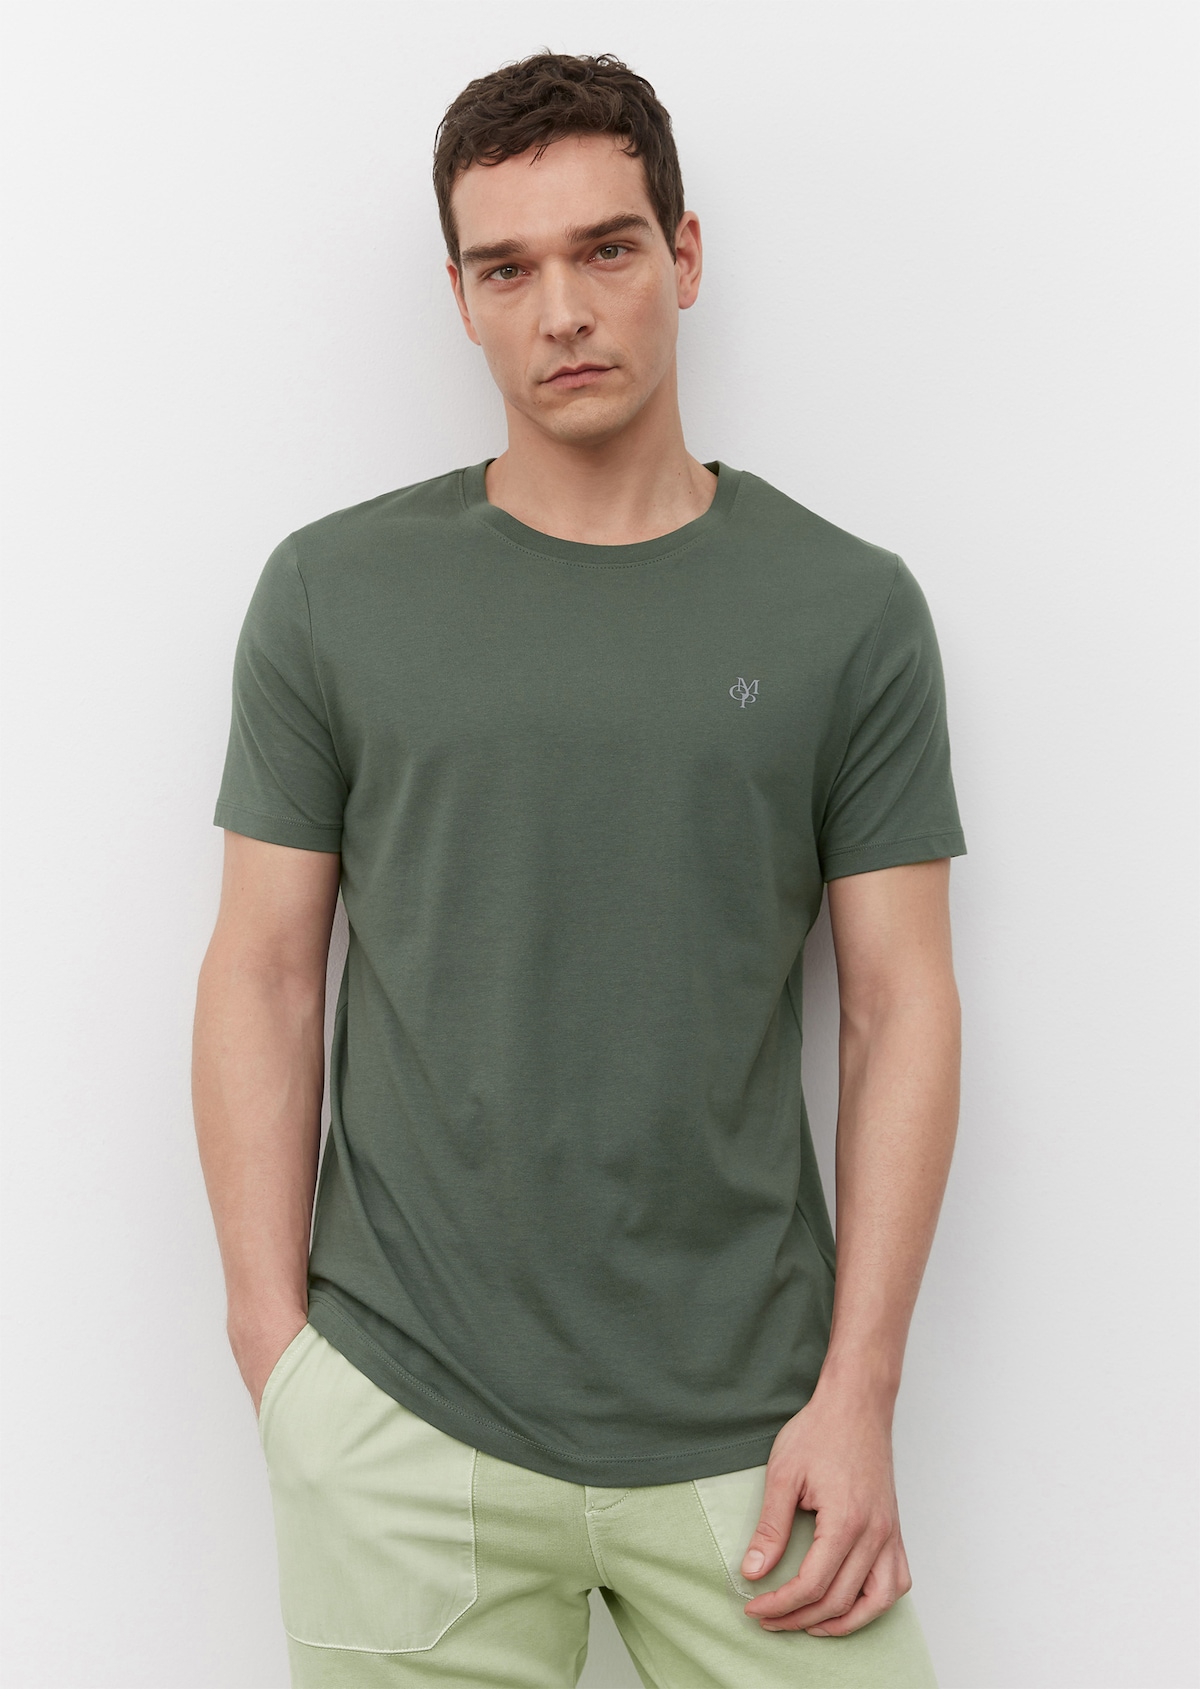 Rundhals-T-Shirt regular aus reinem Organic Cotton - grün | Bekleidung |  MARC O'POLO